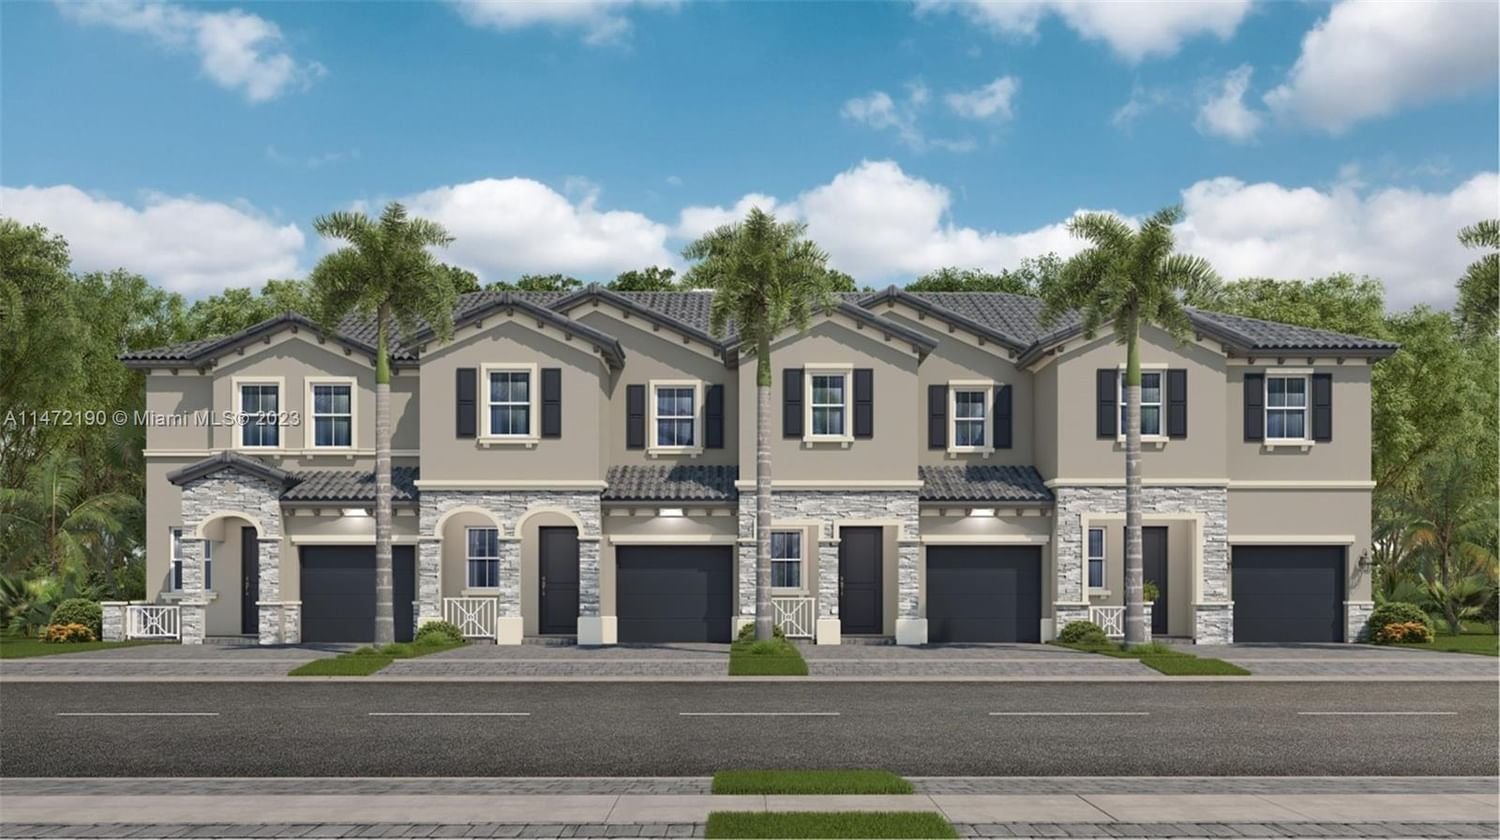 Real estate property located at 29017 162 CT, Miami-Dade County, Cedar Pointe, Homestead, FL